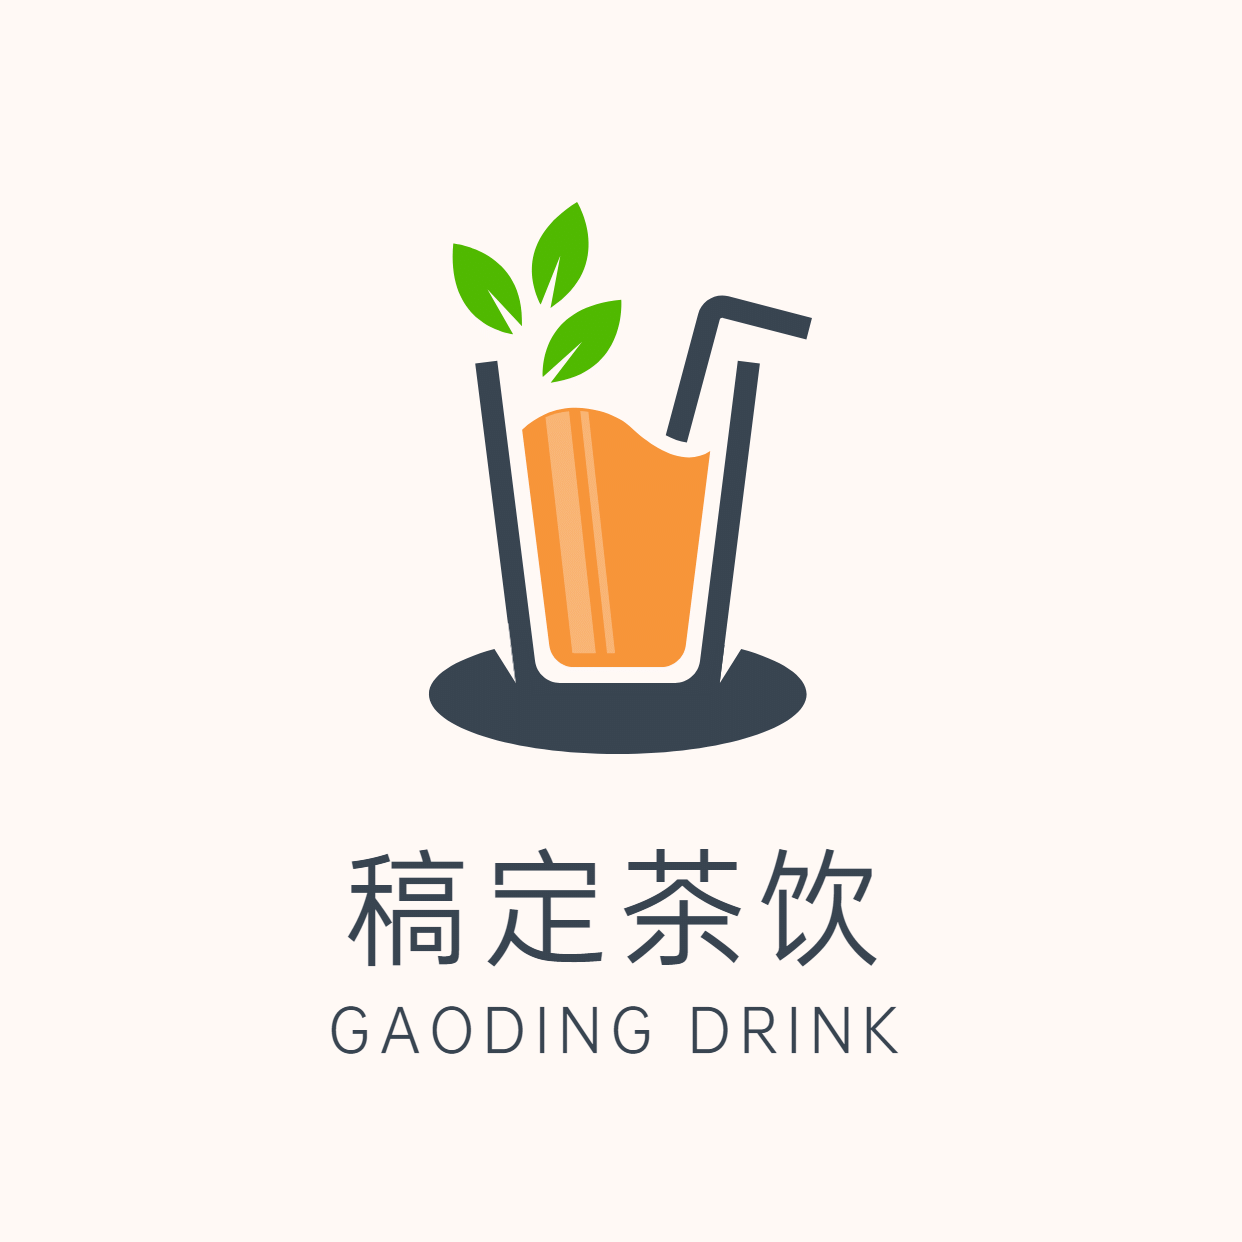 Logo头像餐饮美食茶饮店标手绘创意